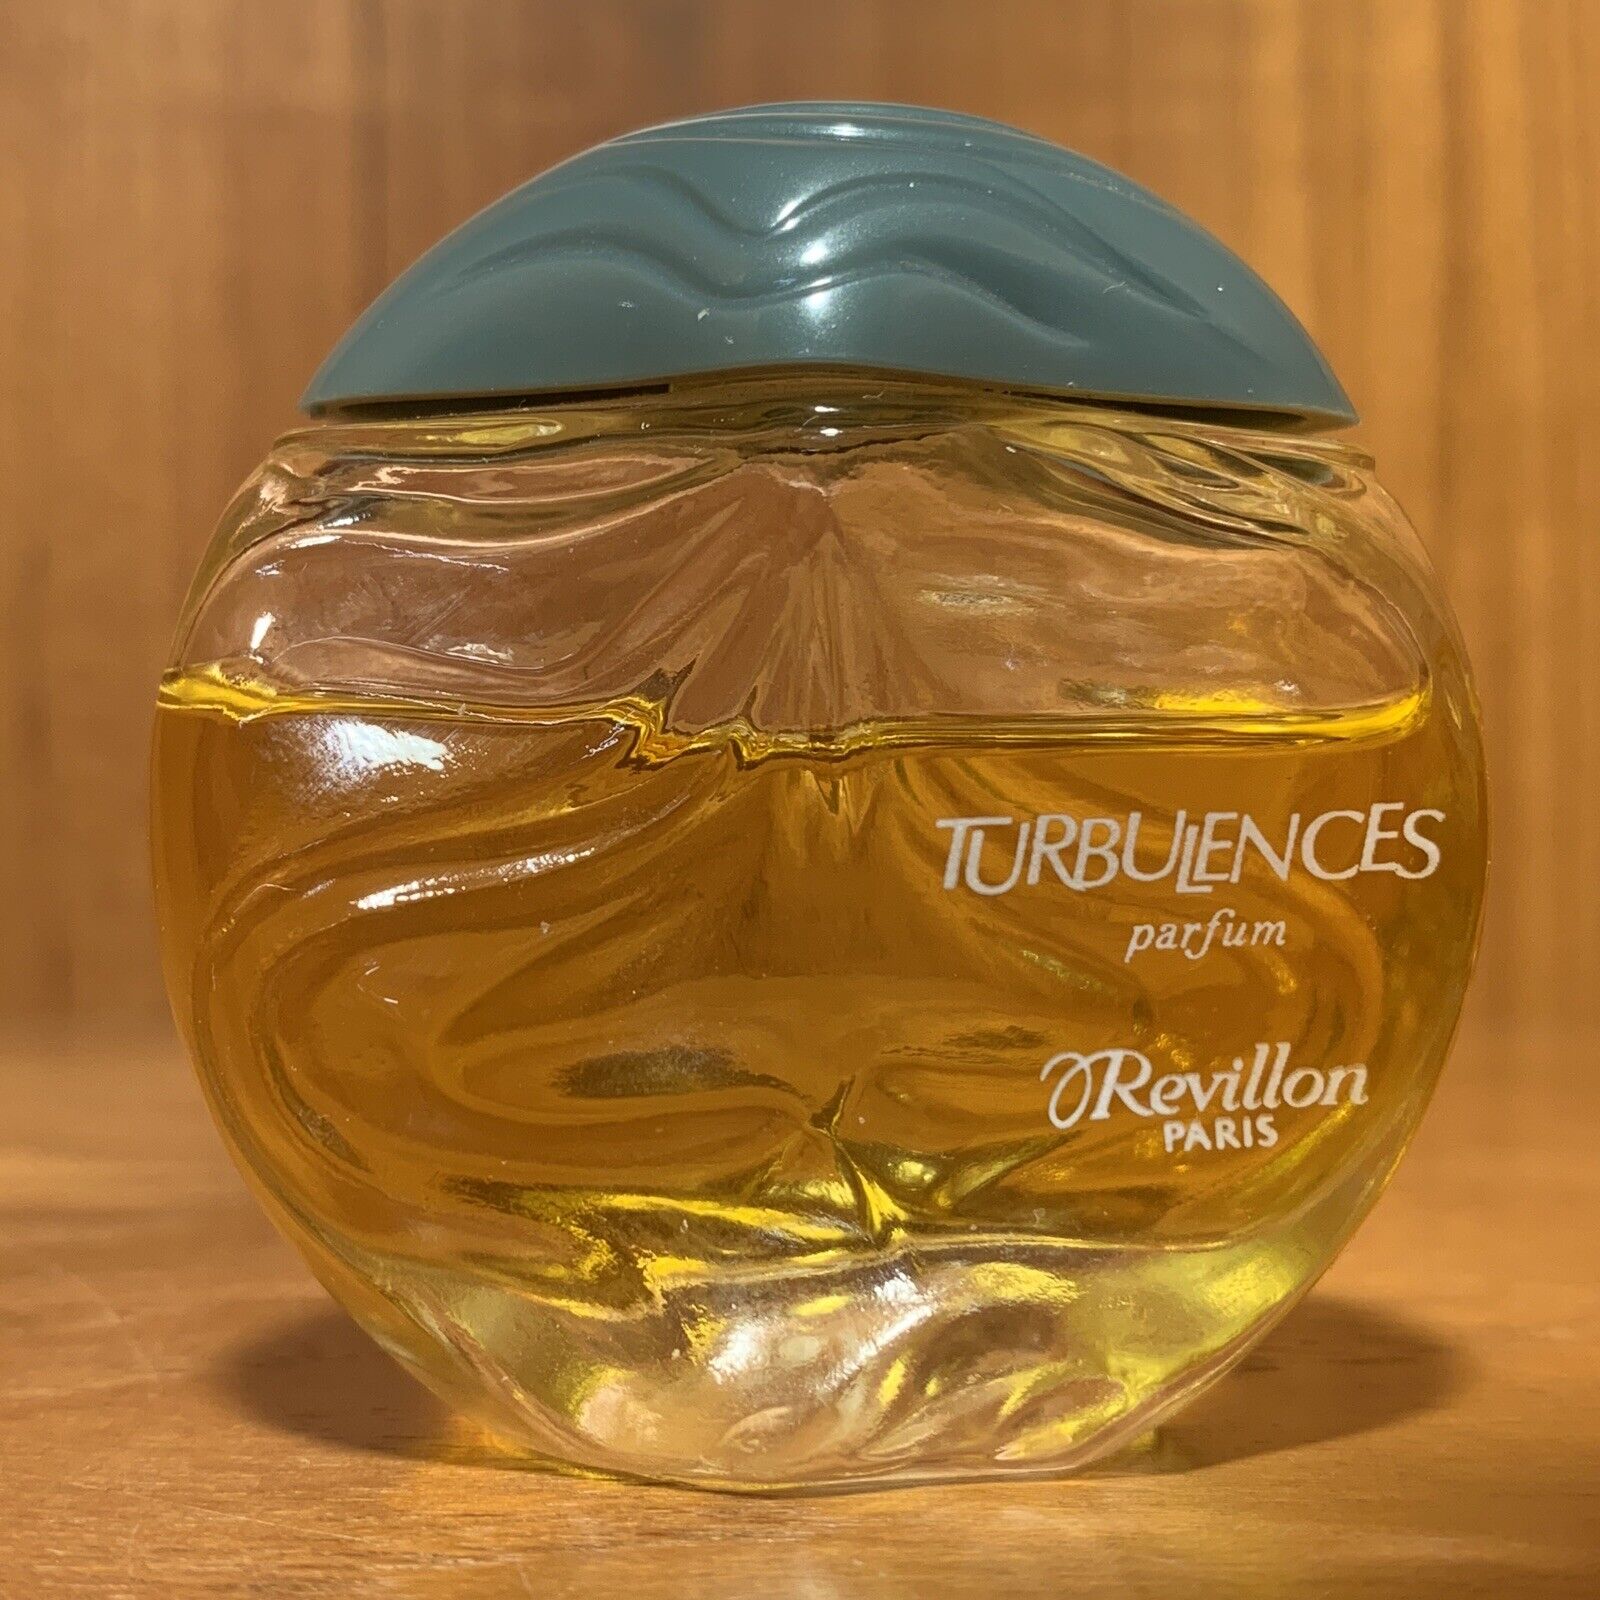 Turbulences Parfum by Revillon Paris Perfume 15ml / .5oz Vintage Splash